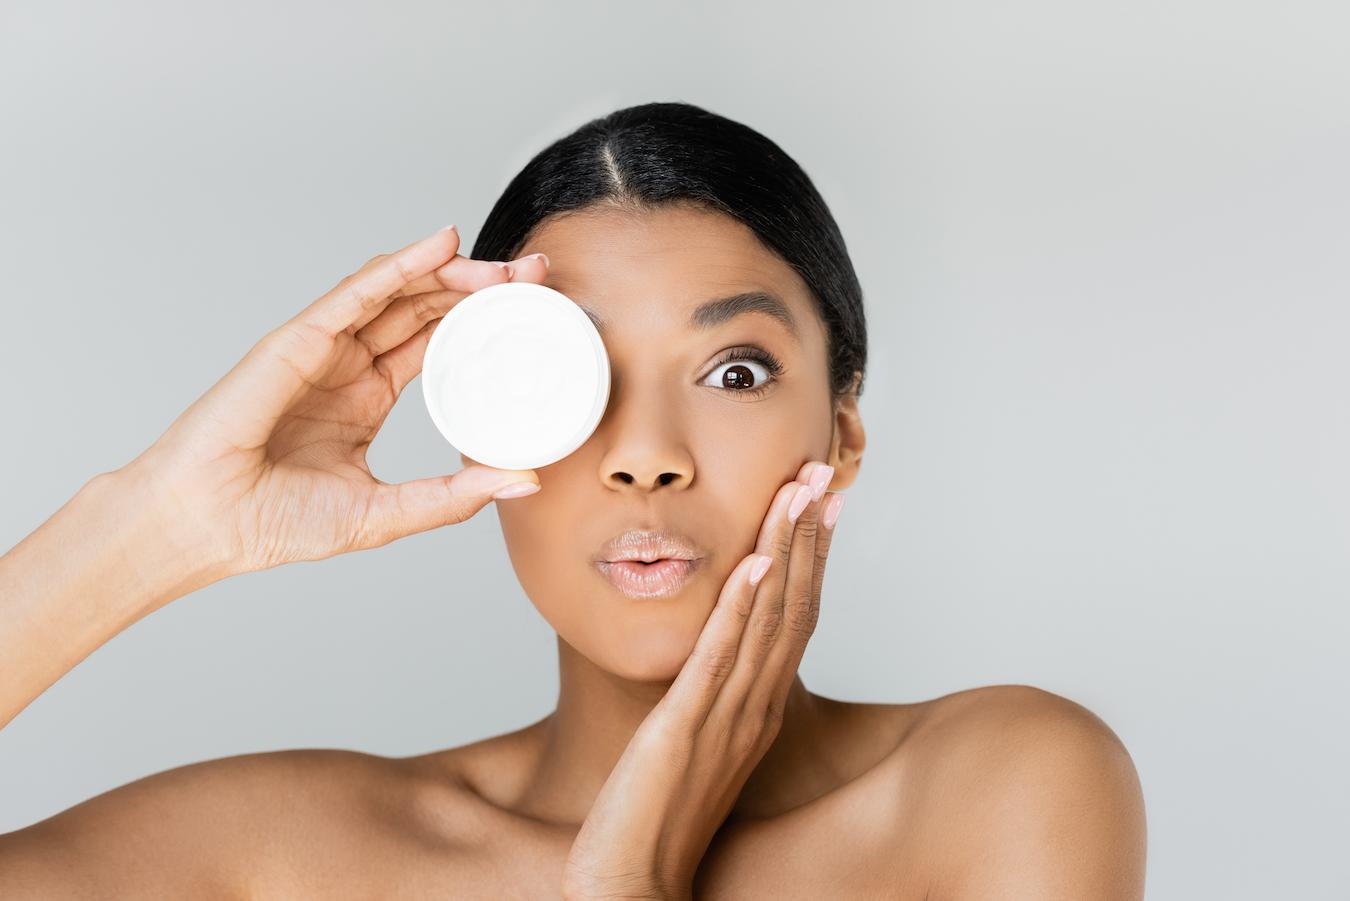 Eye creams treat the delicate skin around your eyes